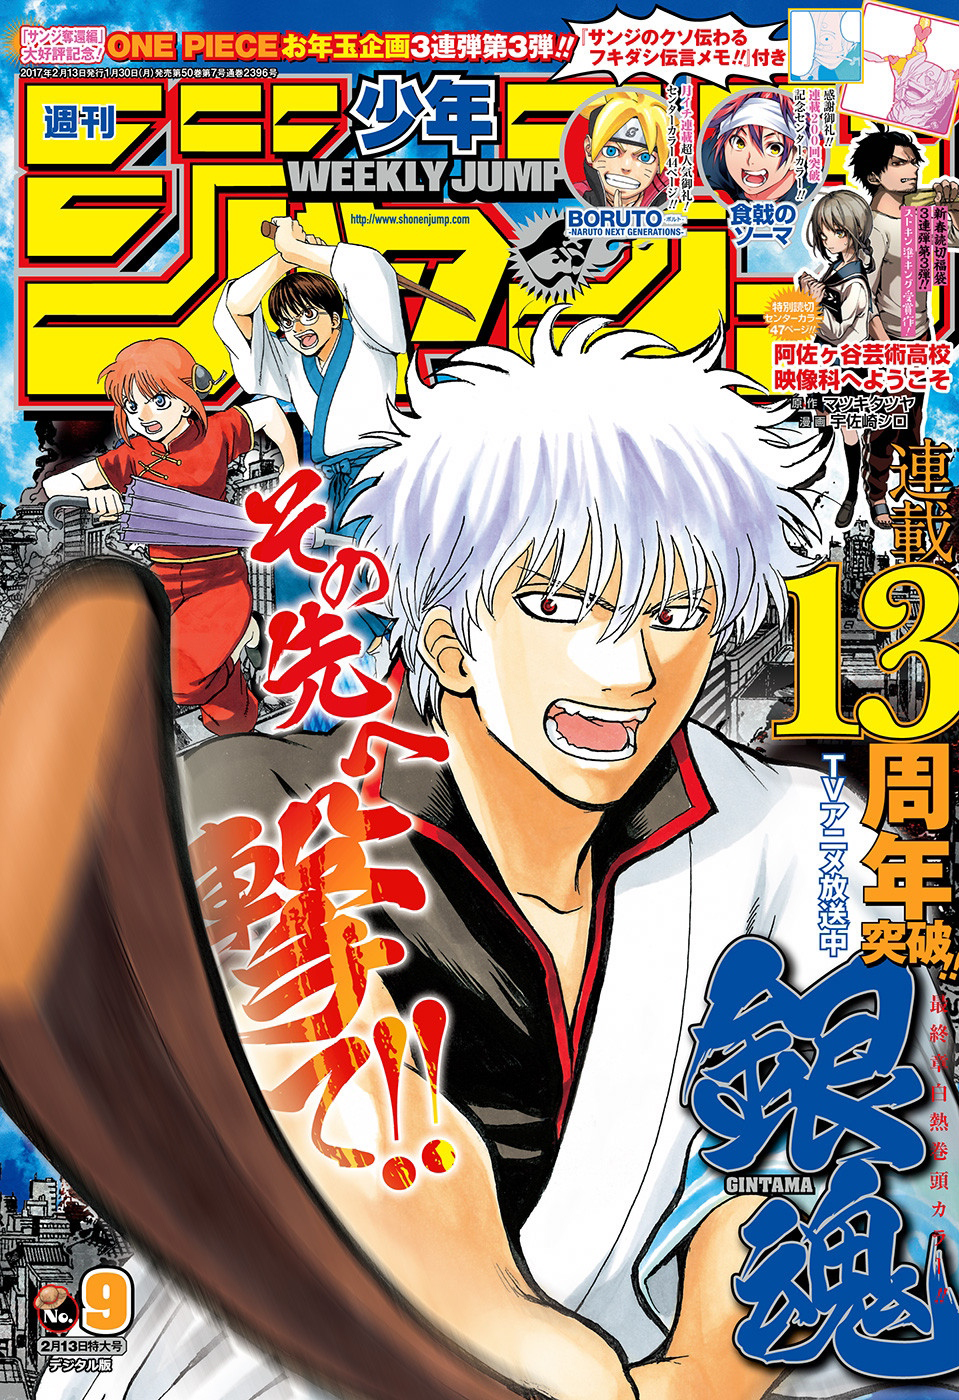 Weekly Shonen Jump Issue 9 17 Jump Database Fandom